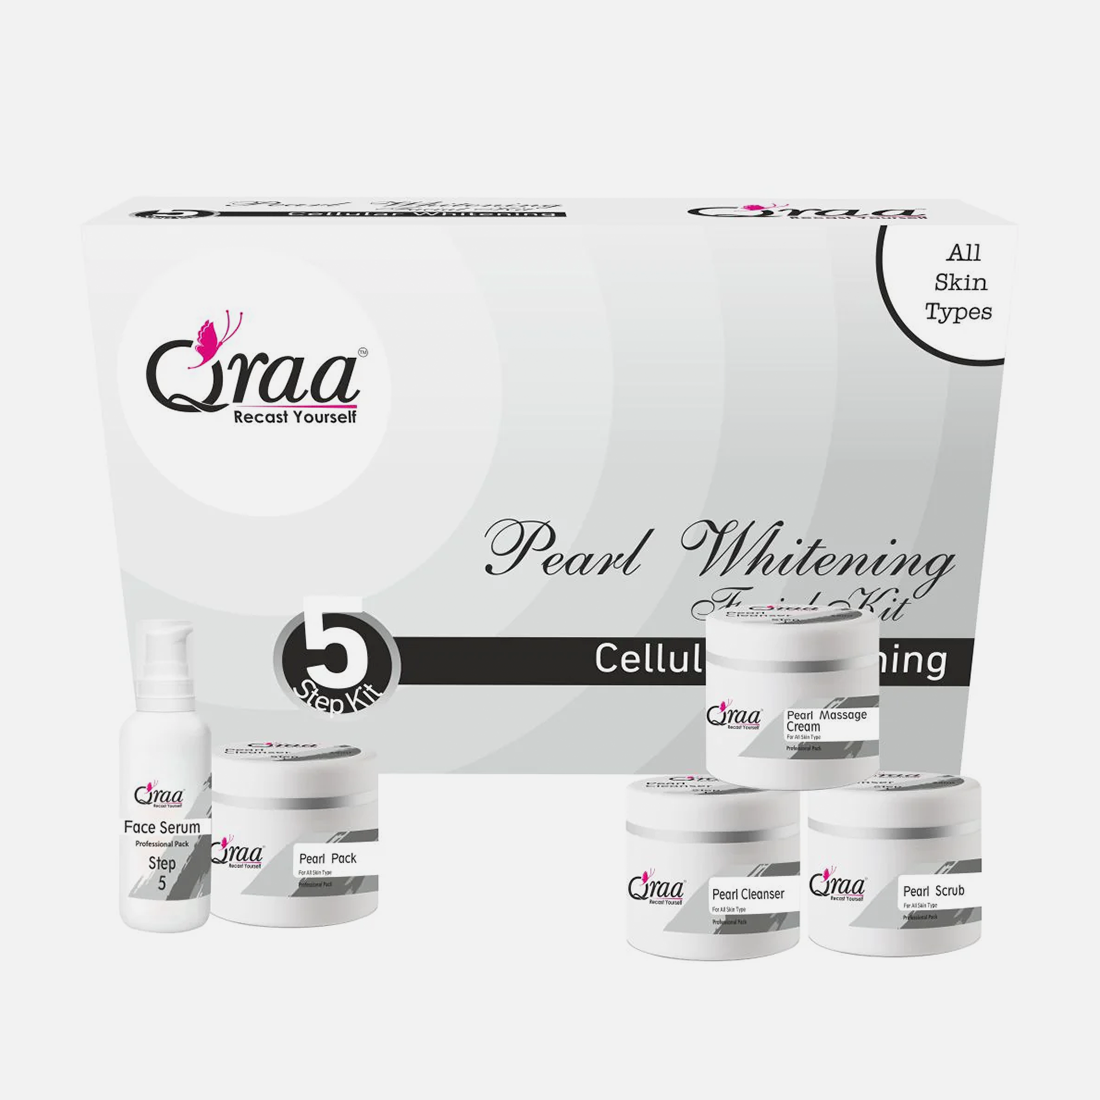 Qraa Pearl Whitening Facial Kit